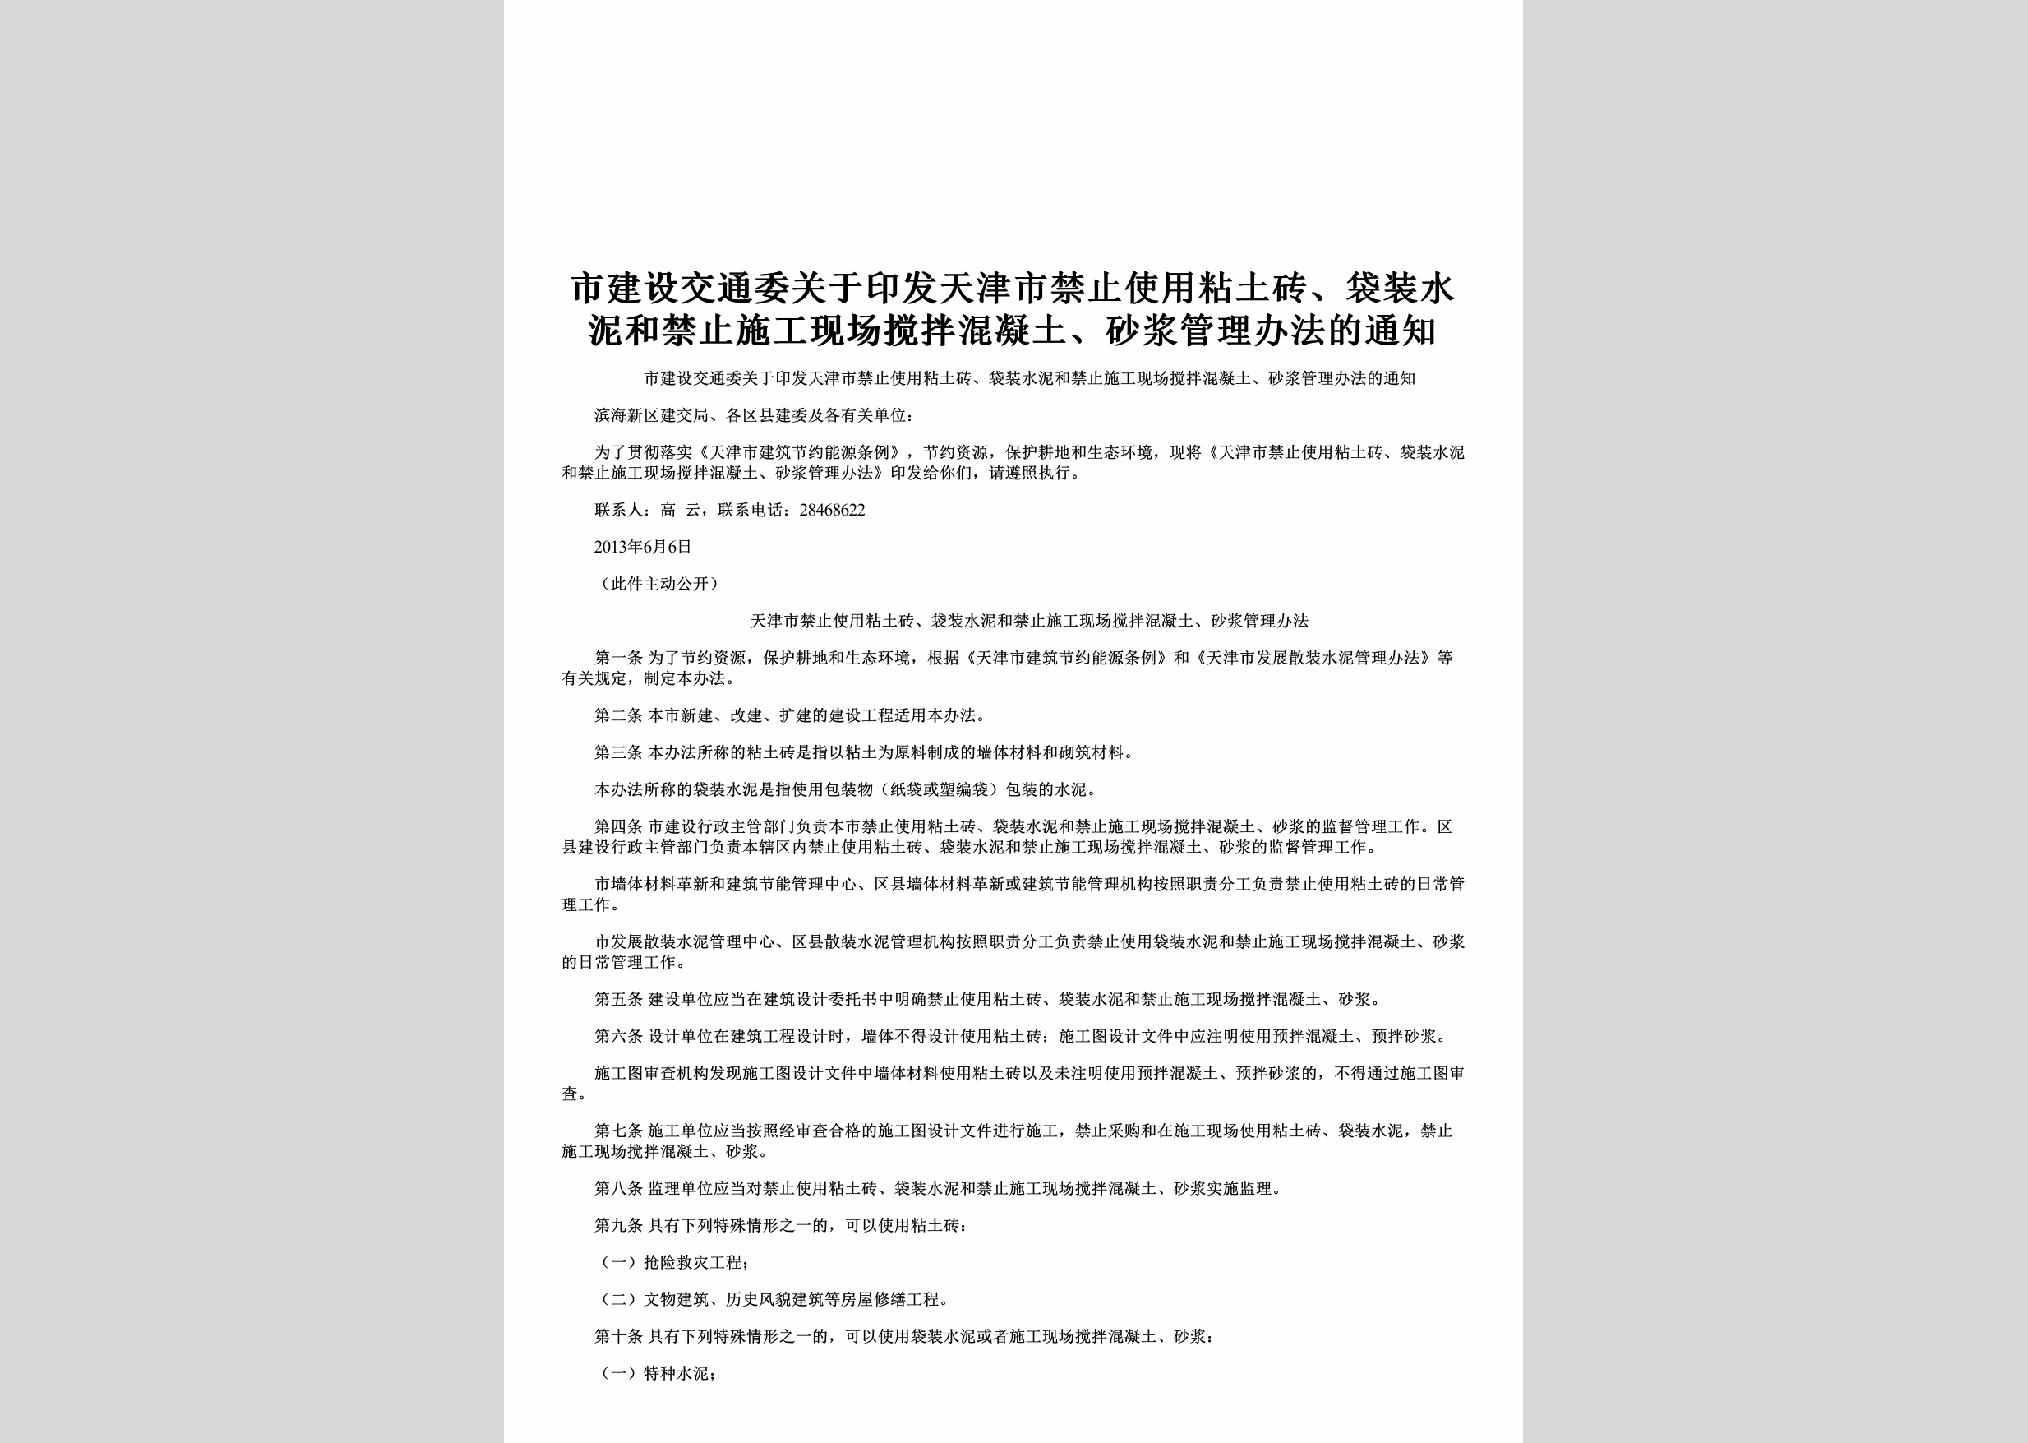 TJ-JZSGXCJB-2013：关于印发天津市禁止使用粘土砖、袋装水泥和禁止施工现场搅拌混凝土、砂浆管理办法的通知